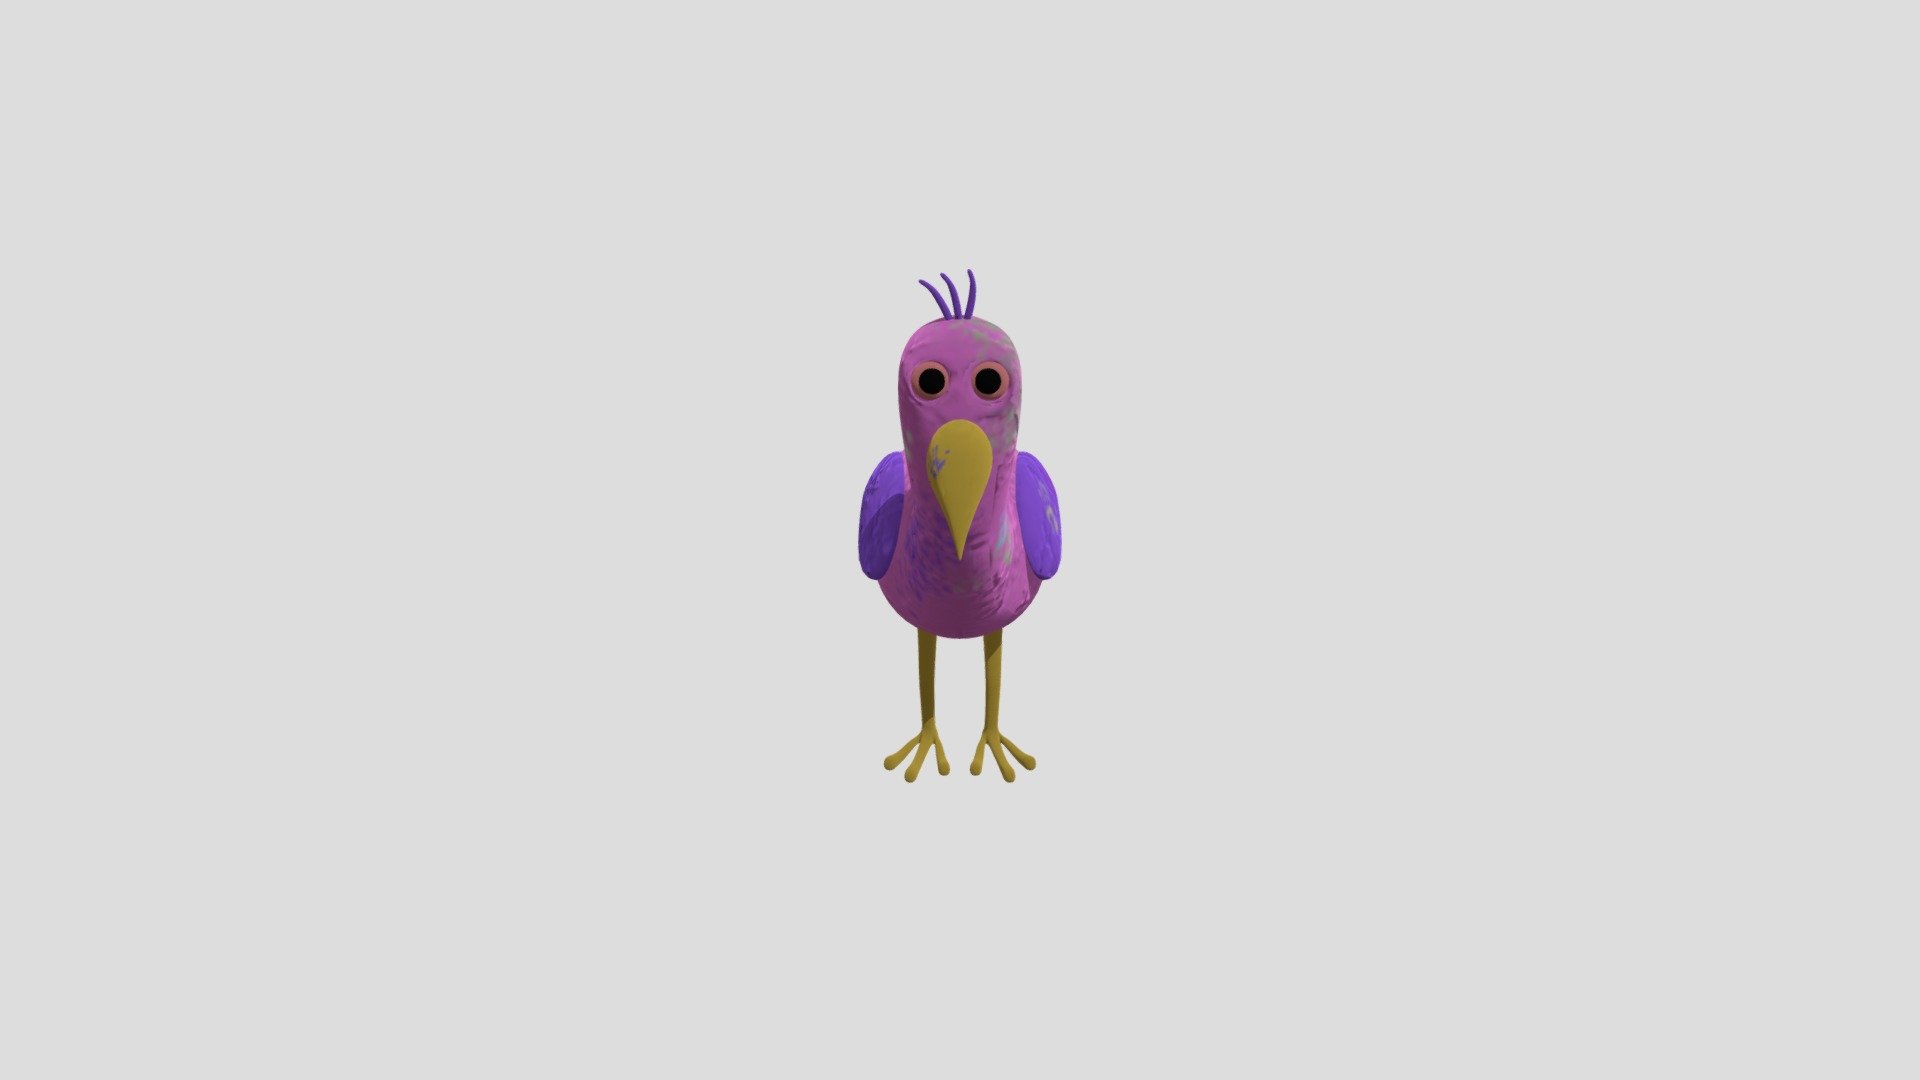 Opila Bird from the game Garten of Banban